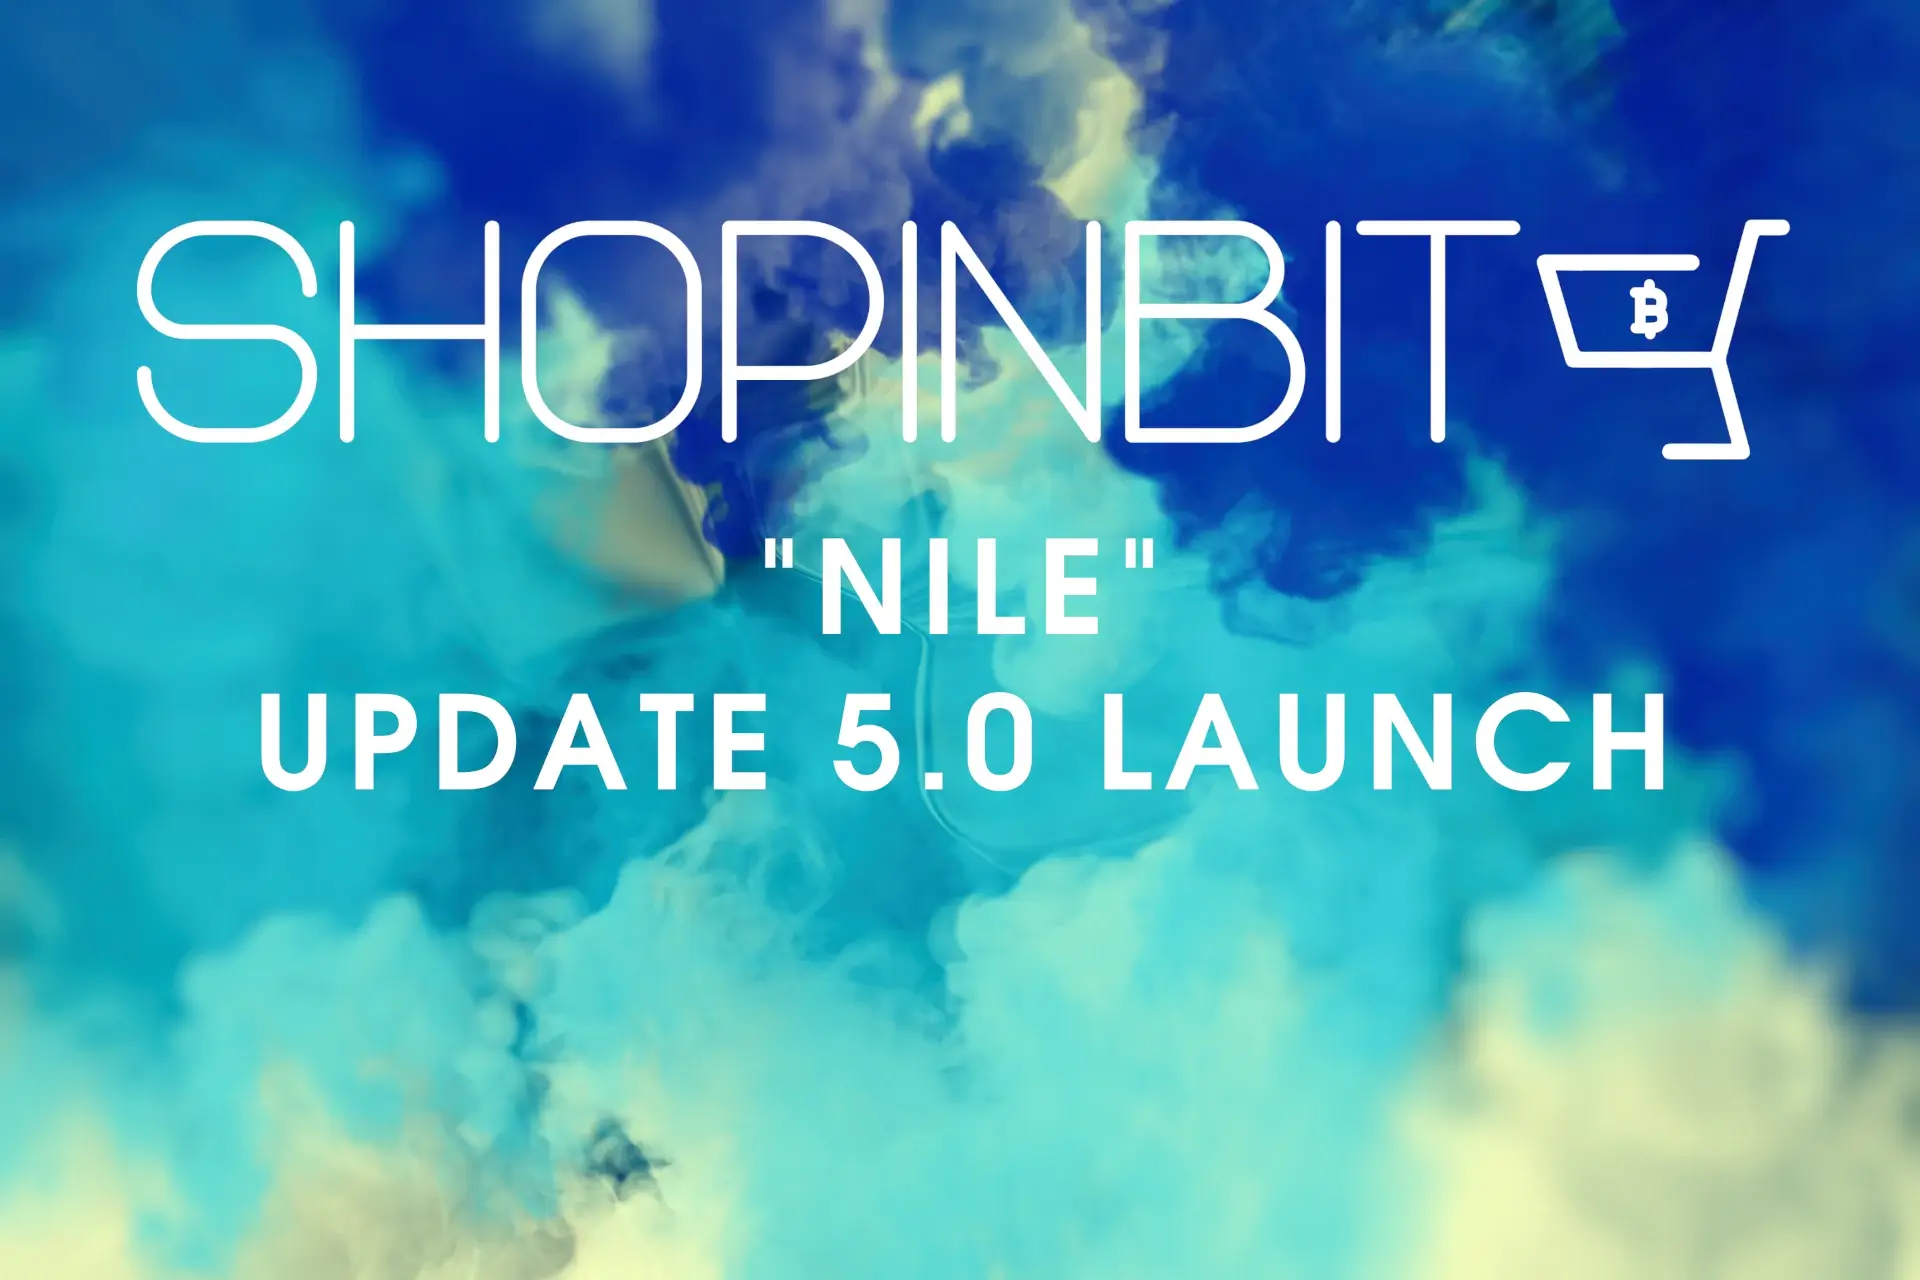 Das SHOPINBIT 5.0 UPDATE "NILE"